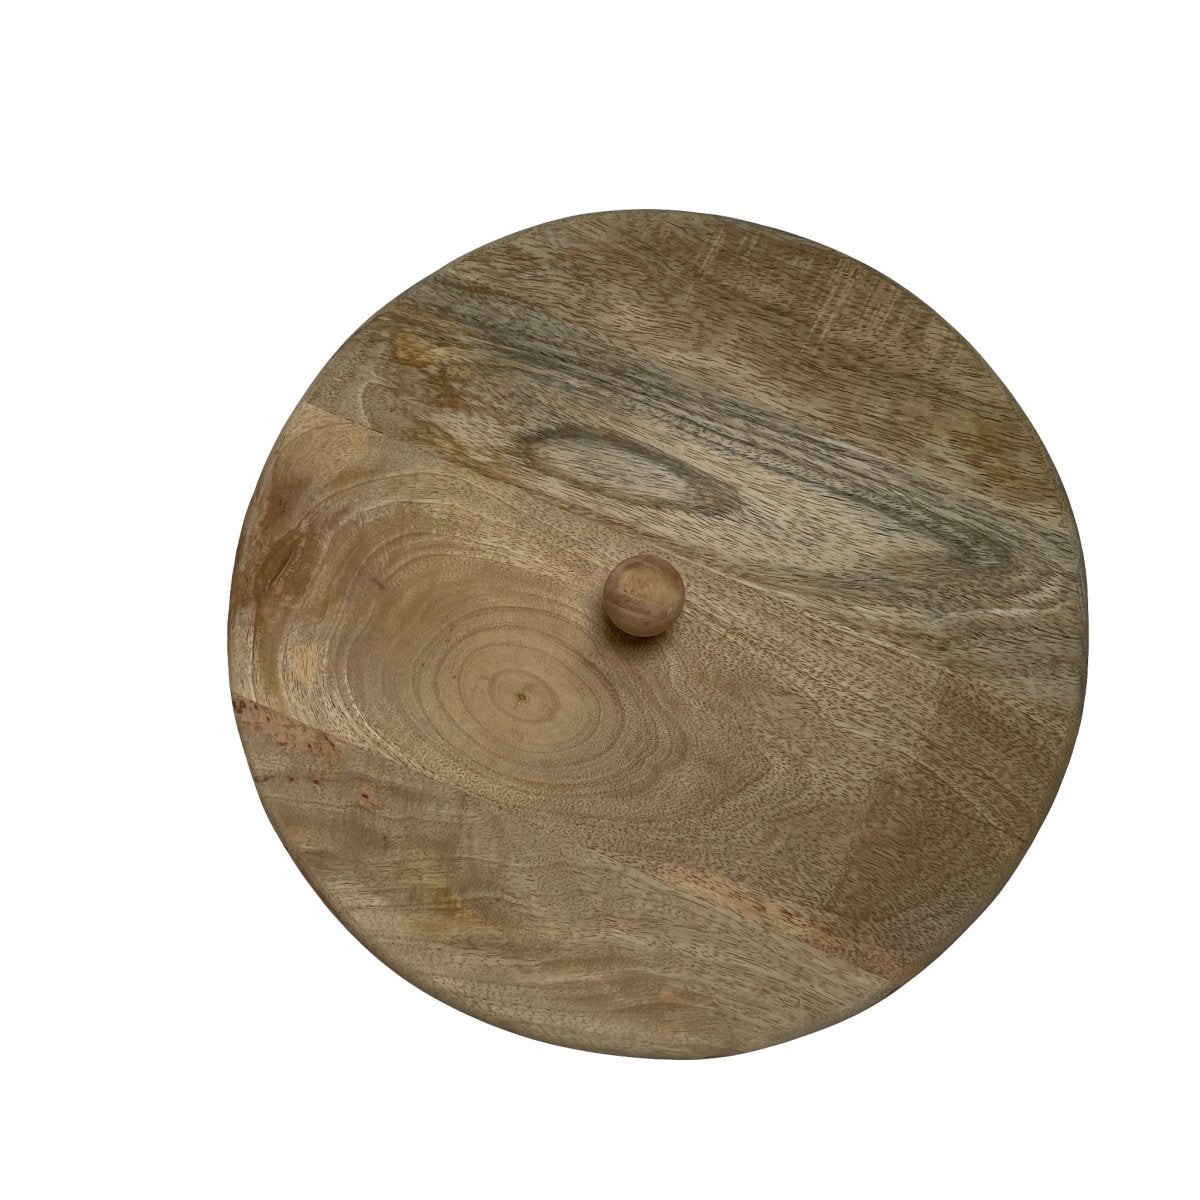 Medium Rattan Basket wtih Mango Wood Lid - Rustic Furniture Outlet